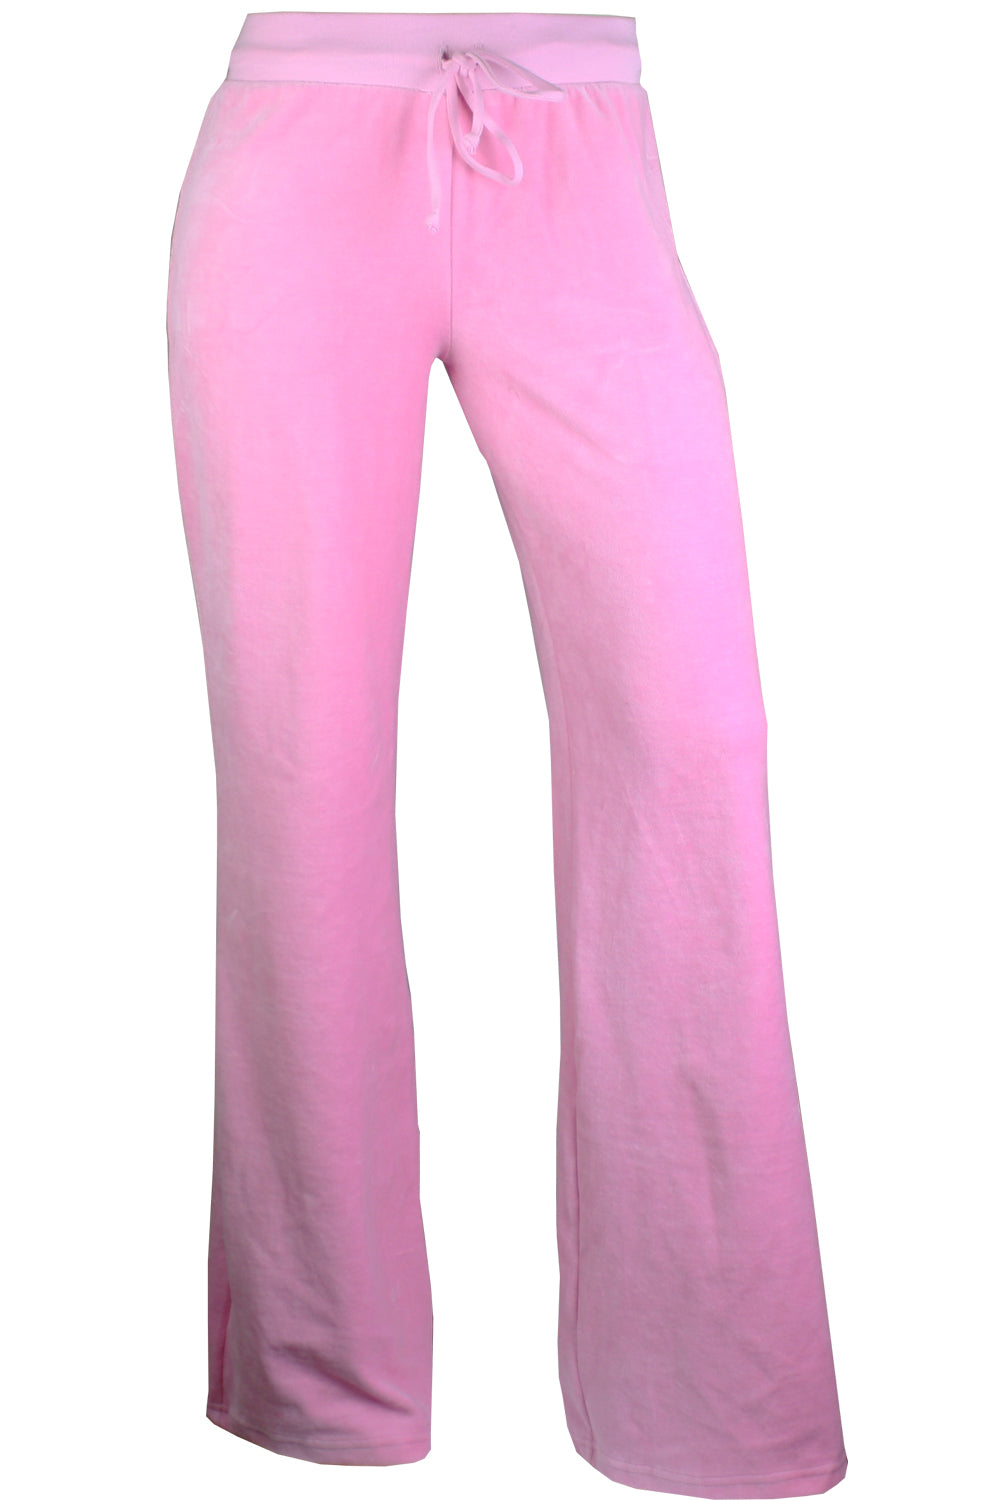 GO COLORS Women Solid Baby Pink Ponte Wide Leg Pants